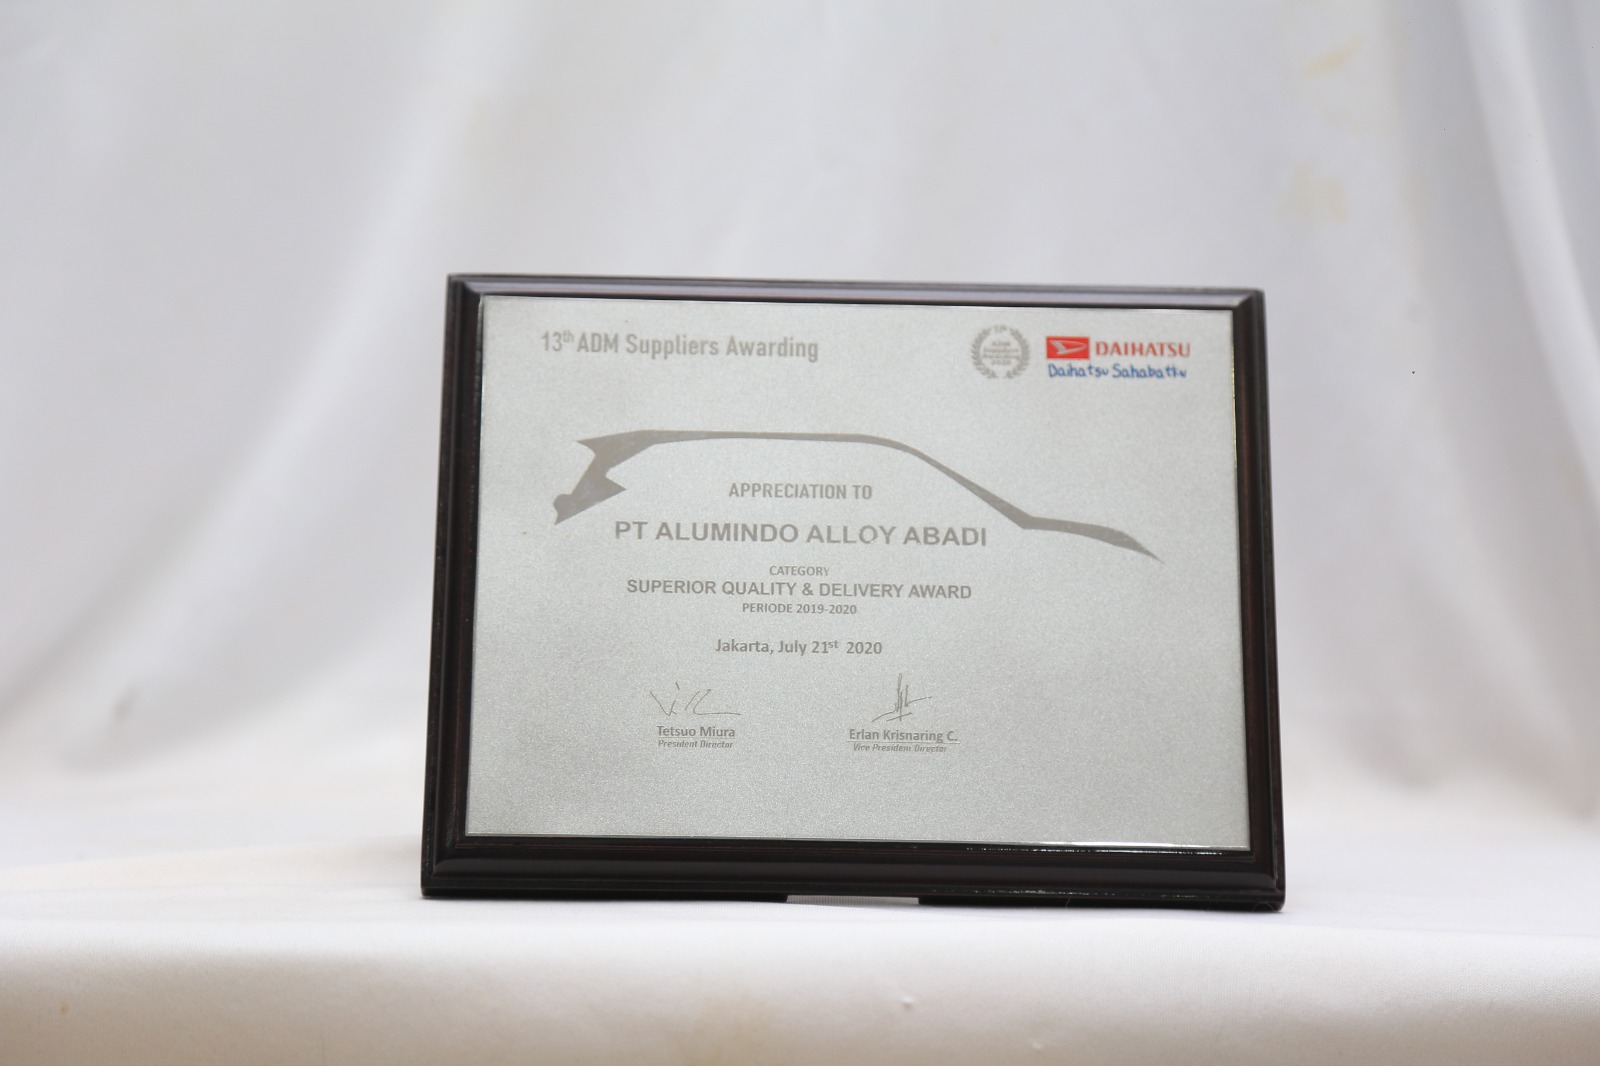 Alumindo Alloy Abadi: Excellence Rewarded by Daihatsu